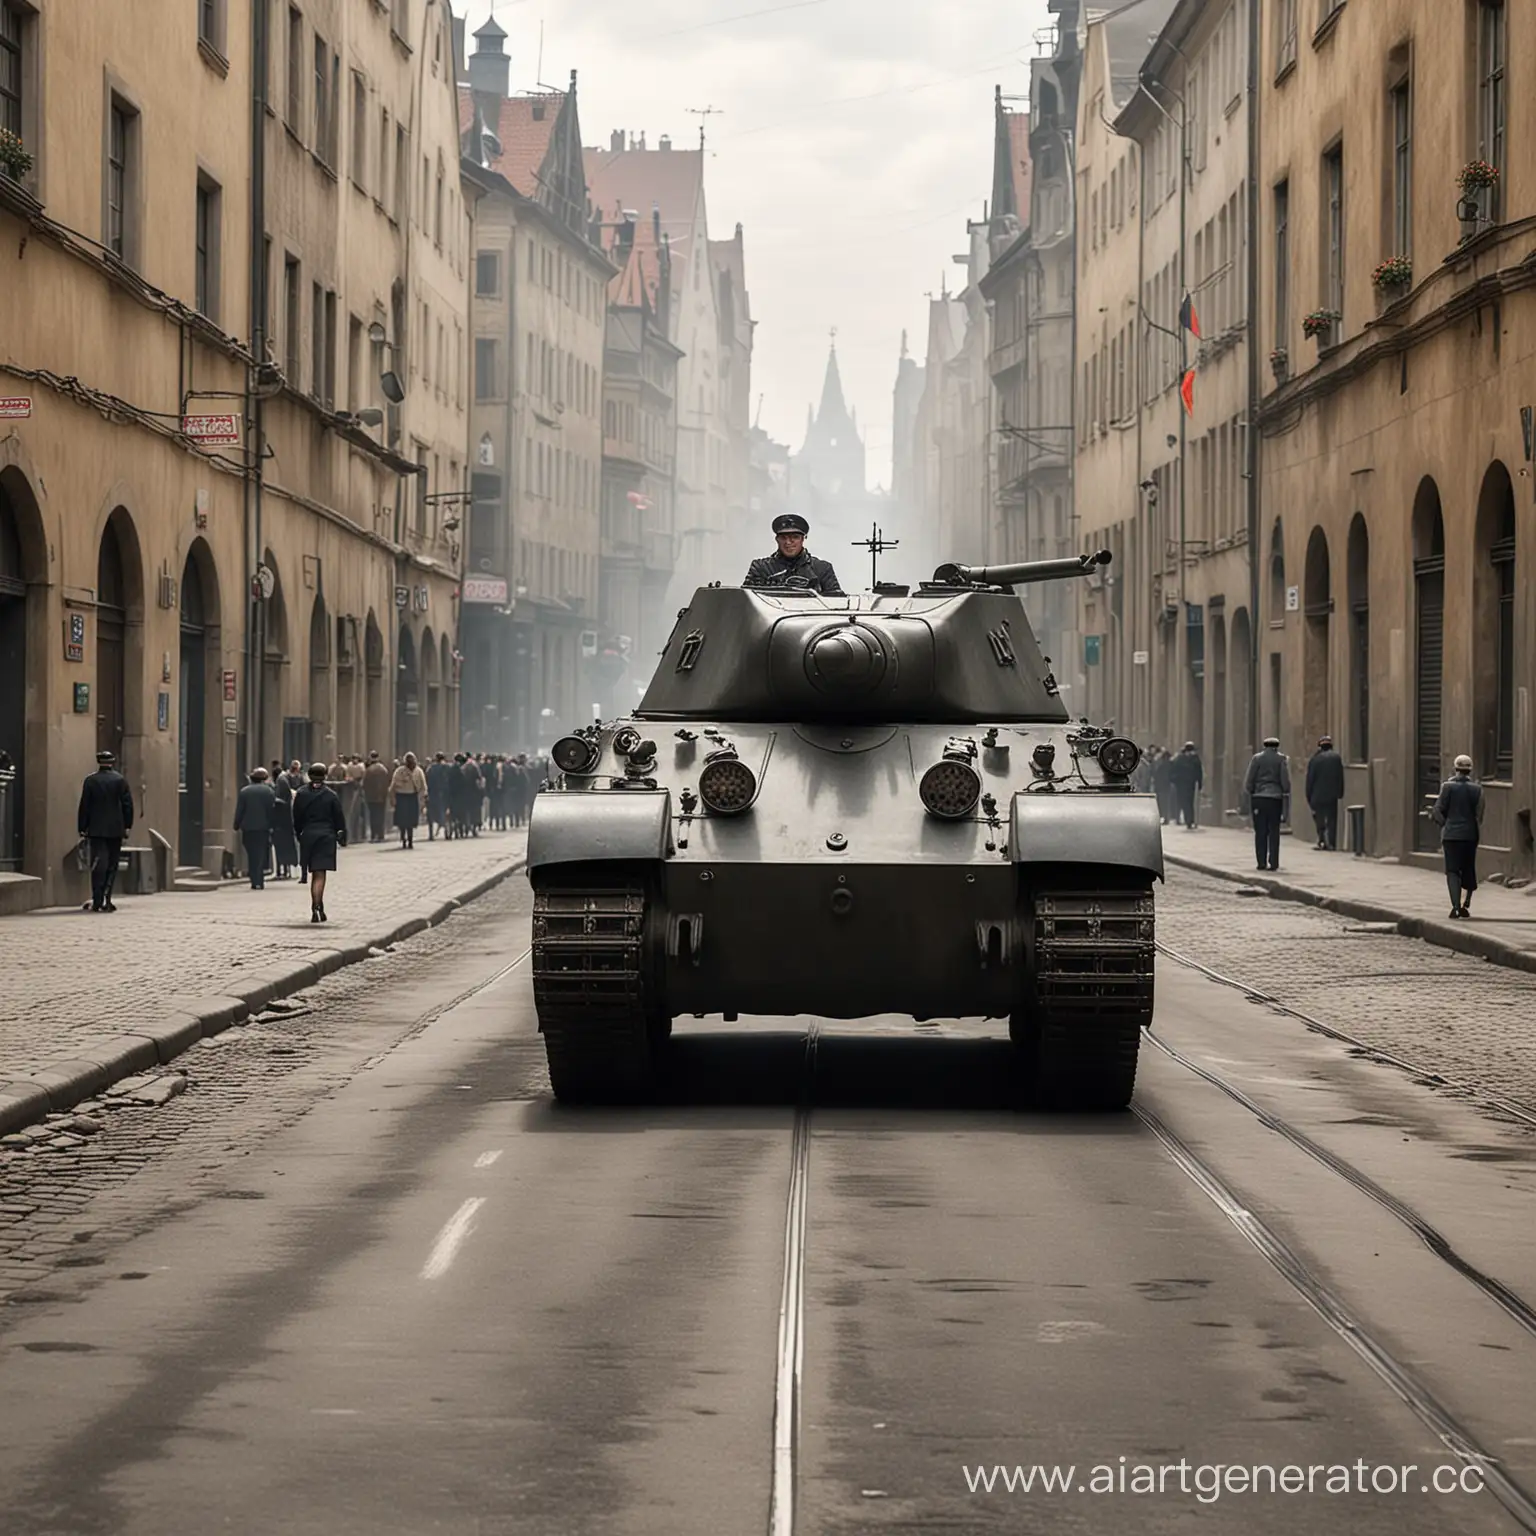 German-Panther-1941-Drives-Through-City-Streets-During-World-War-II